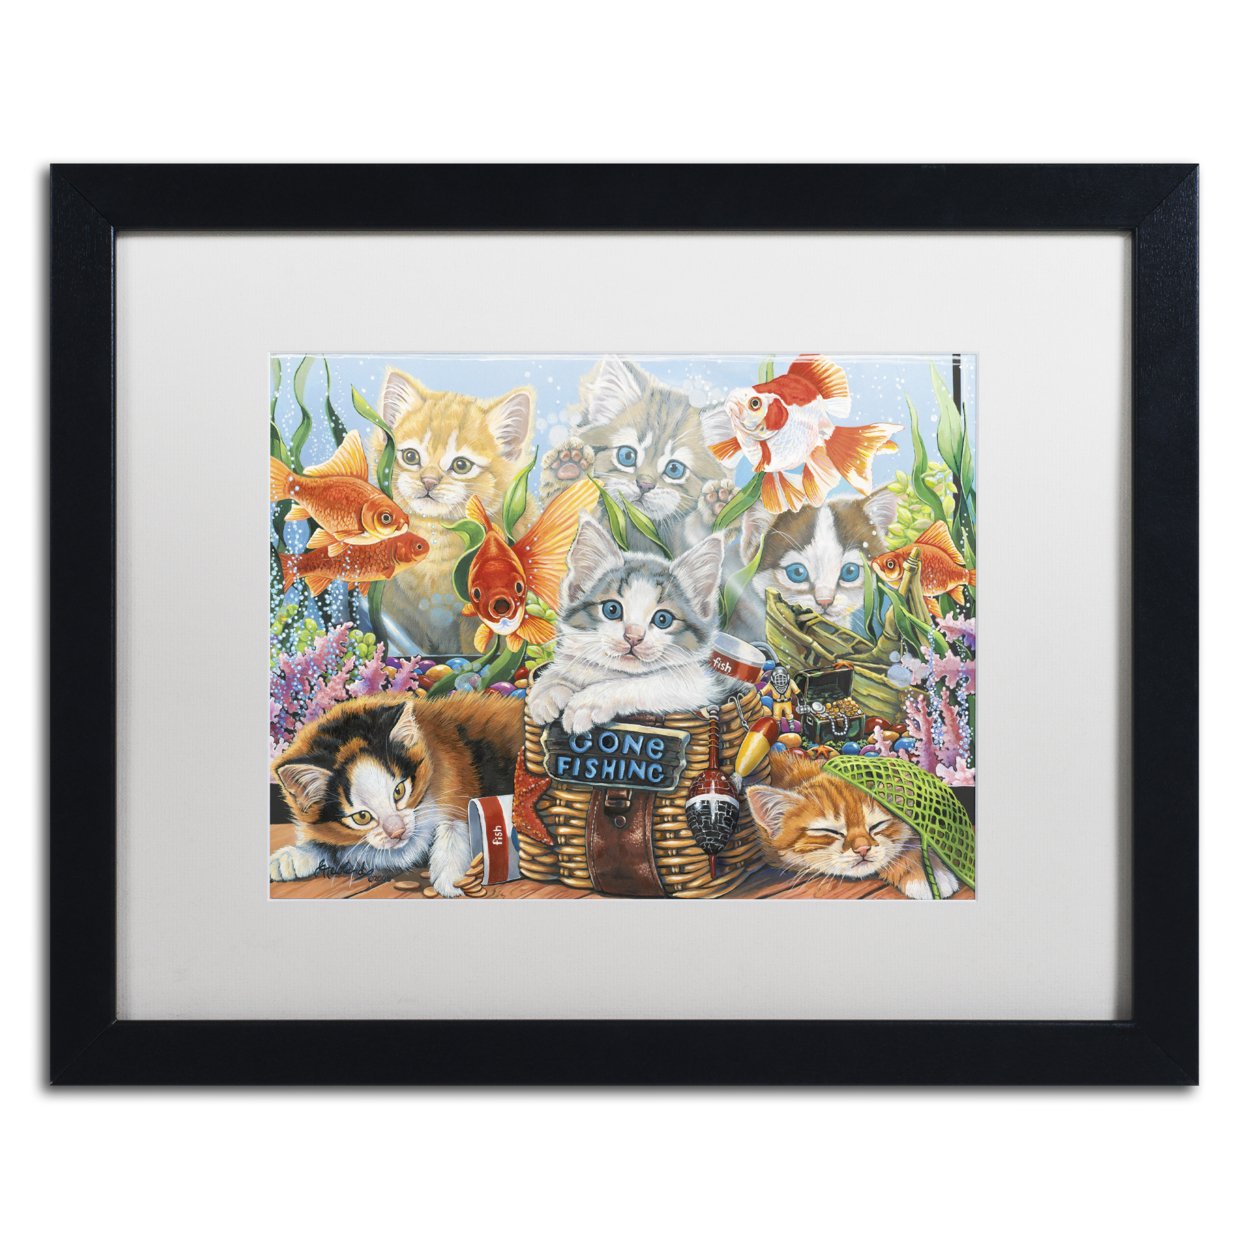 Jenny Newland 'Gone Fishing' Black Wooden Framed Art 18 X 22 Inches